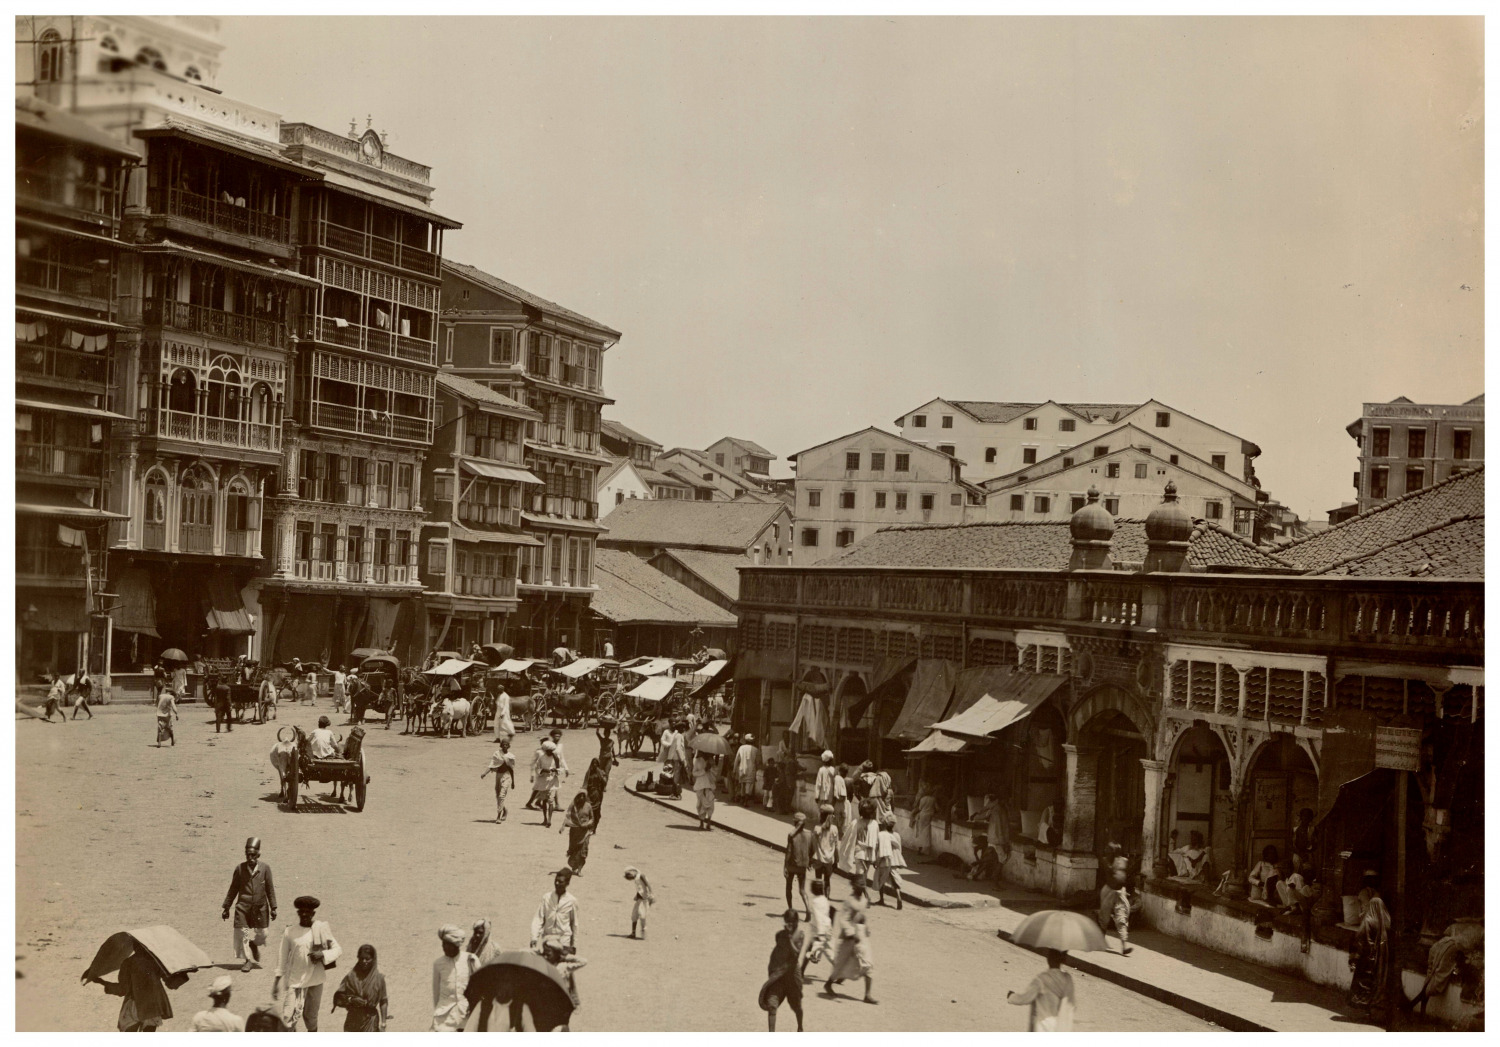 Bourne & Shepherd, India, Bombay, Street Scene Vintage Albumen Print Print Print Print